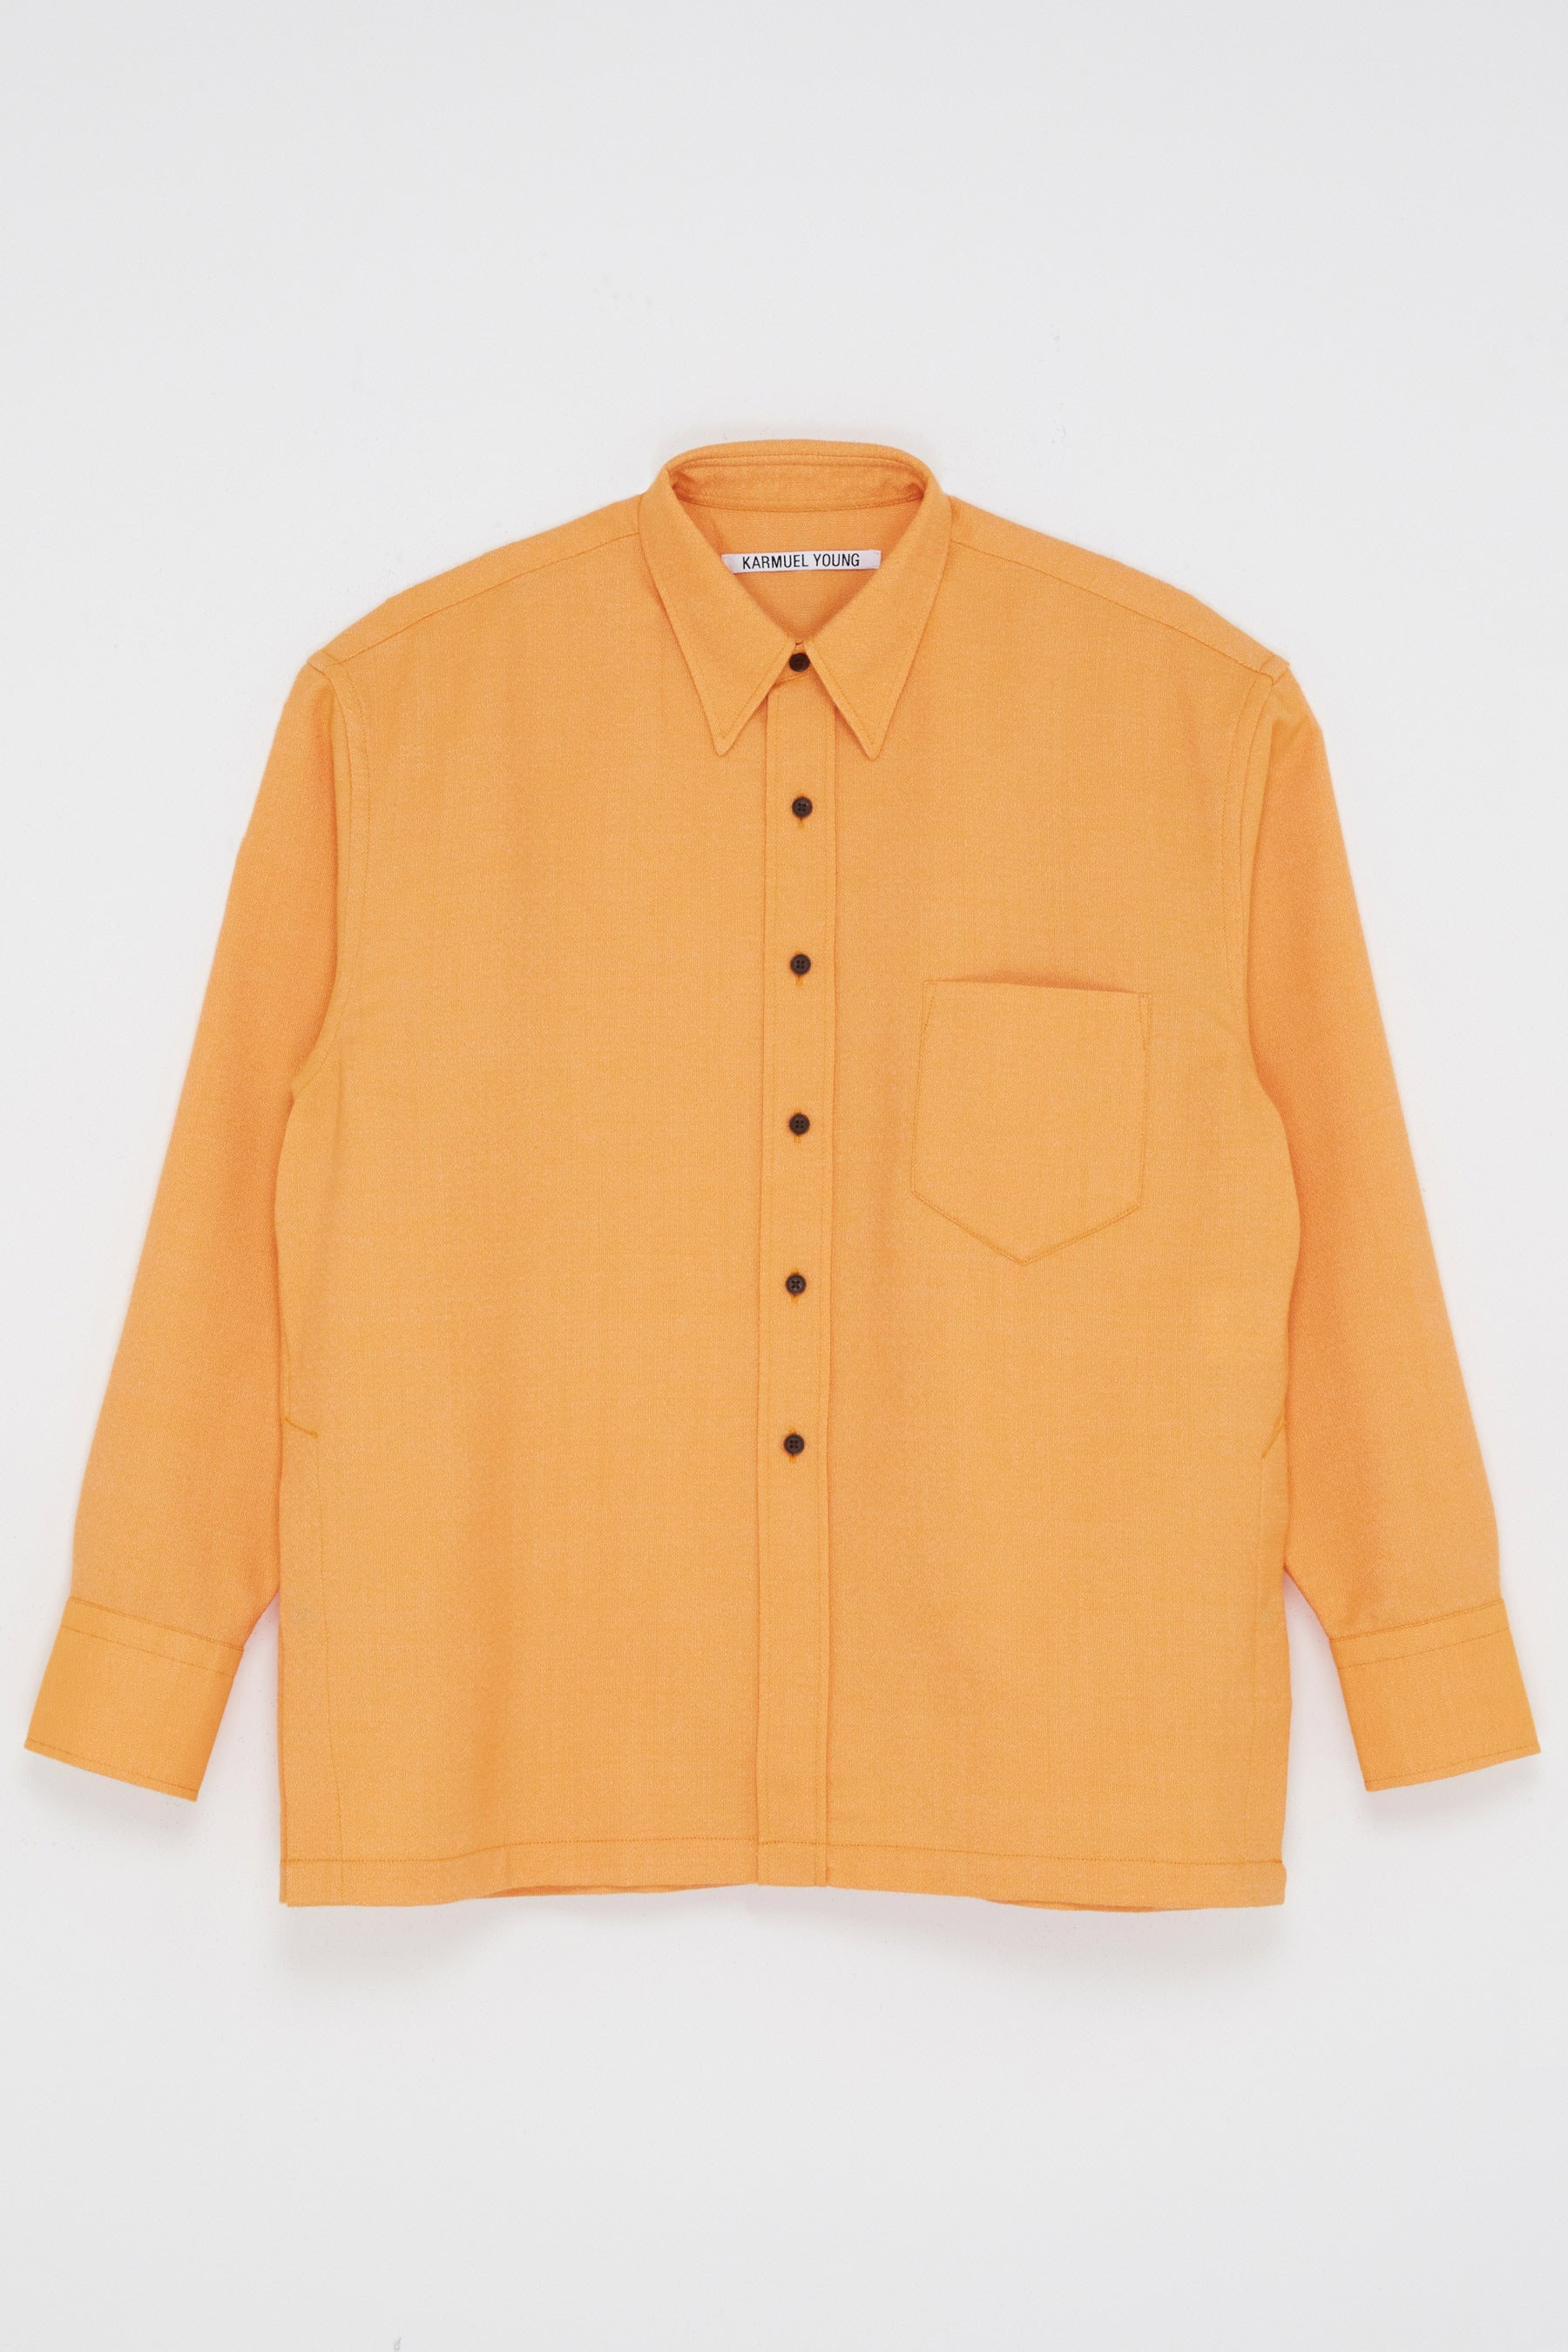 Orange Woollen Square Overshirt